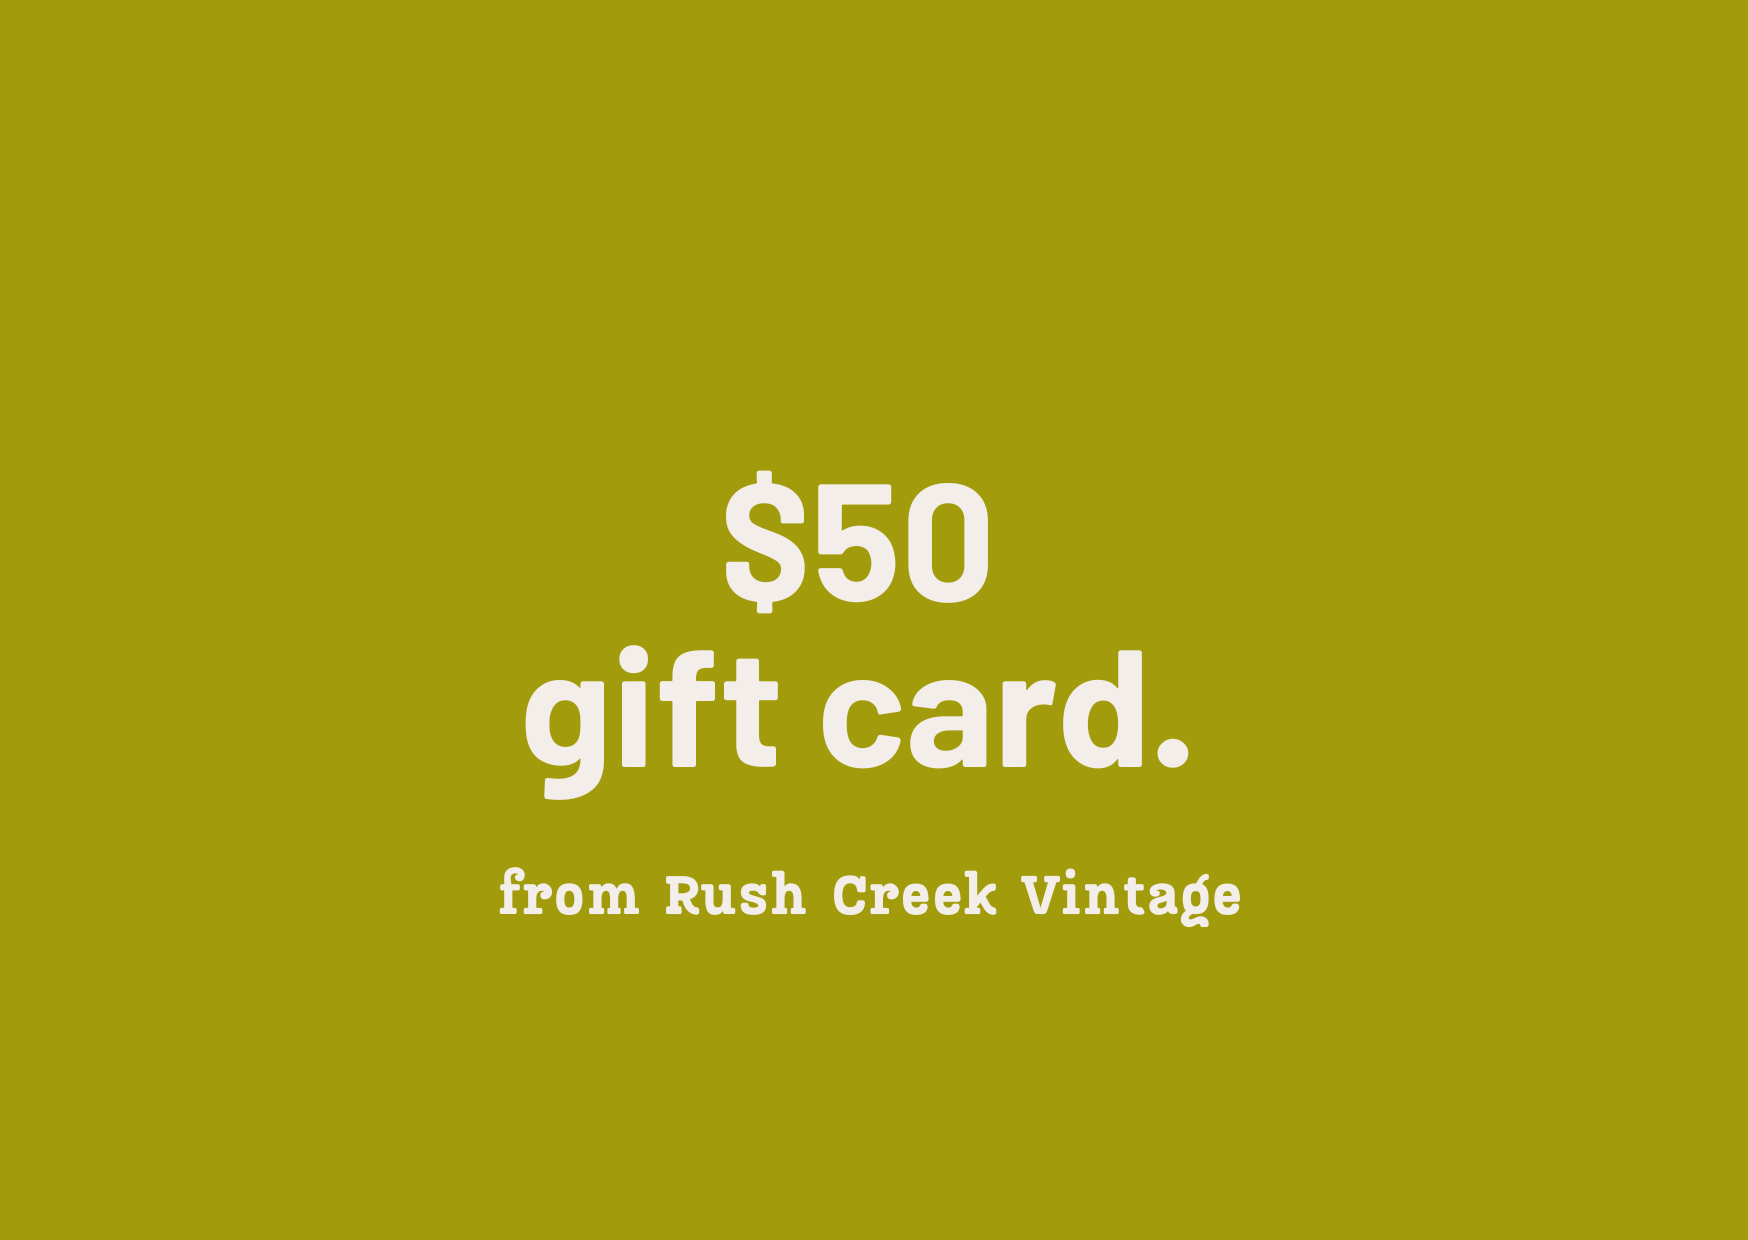 $50 Gift Card to Rush Creek Vintage